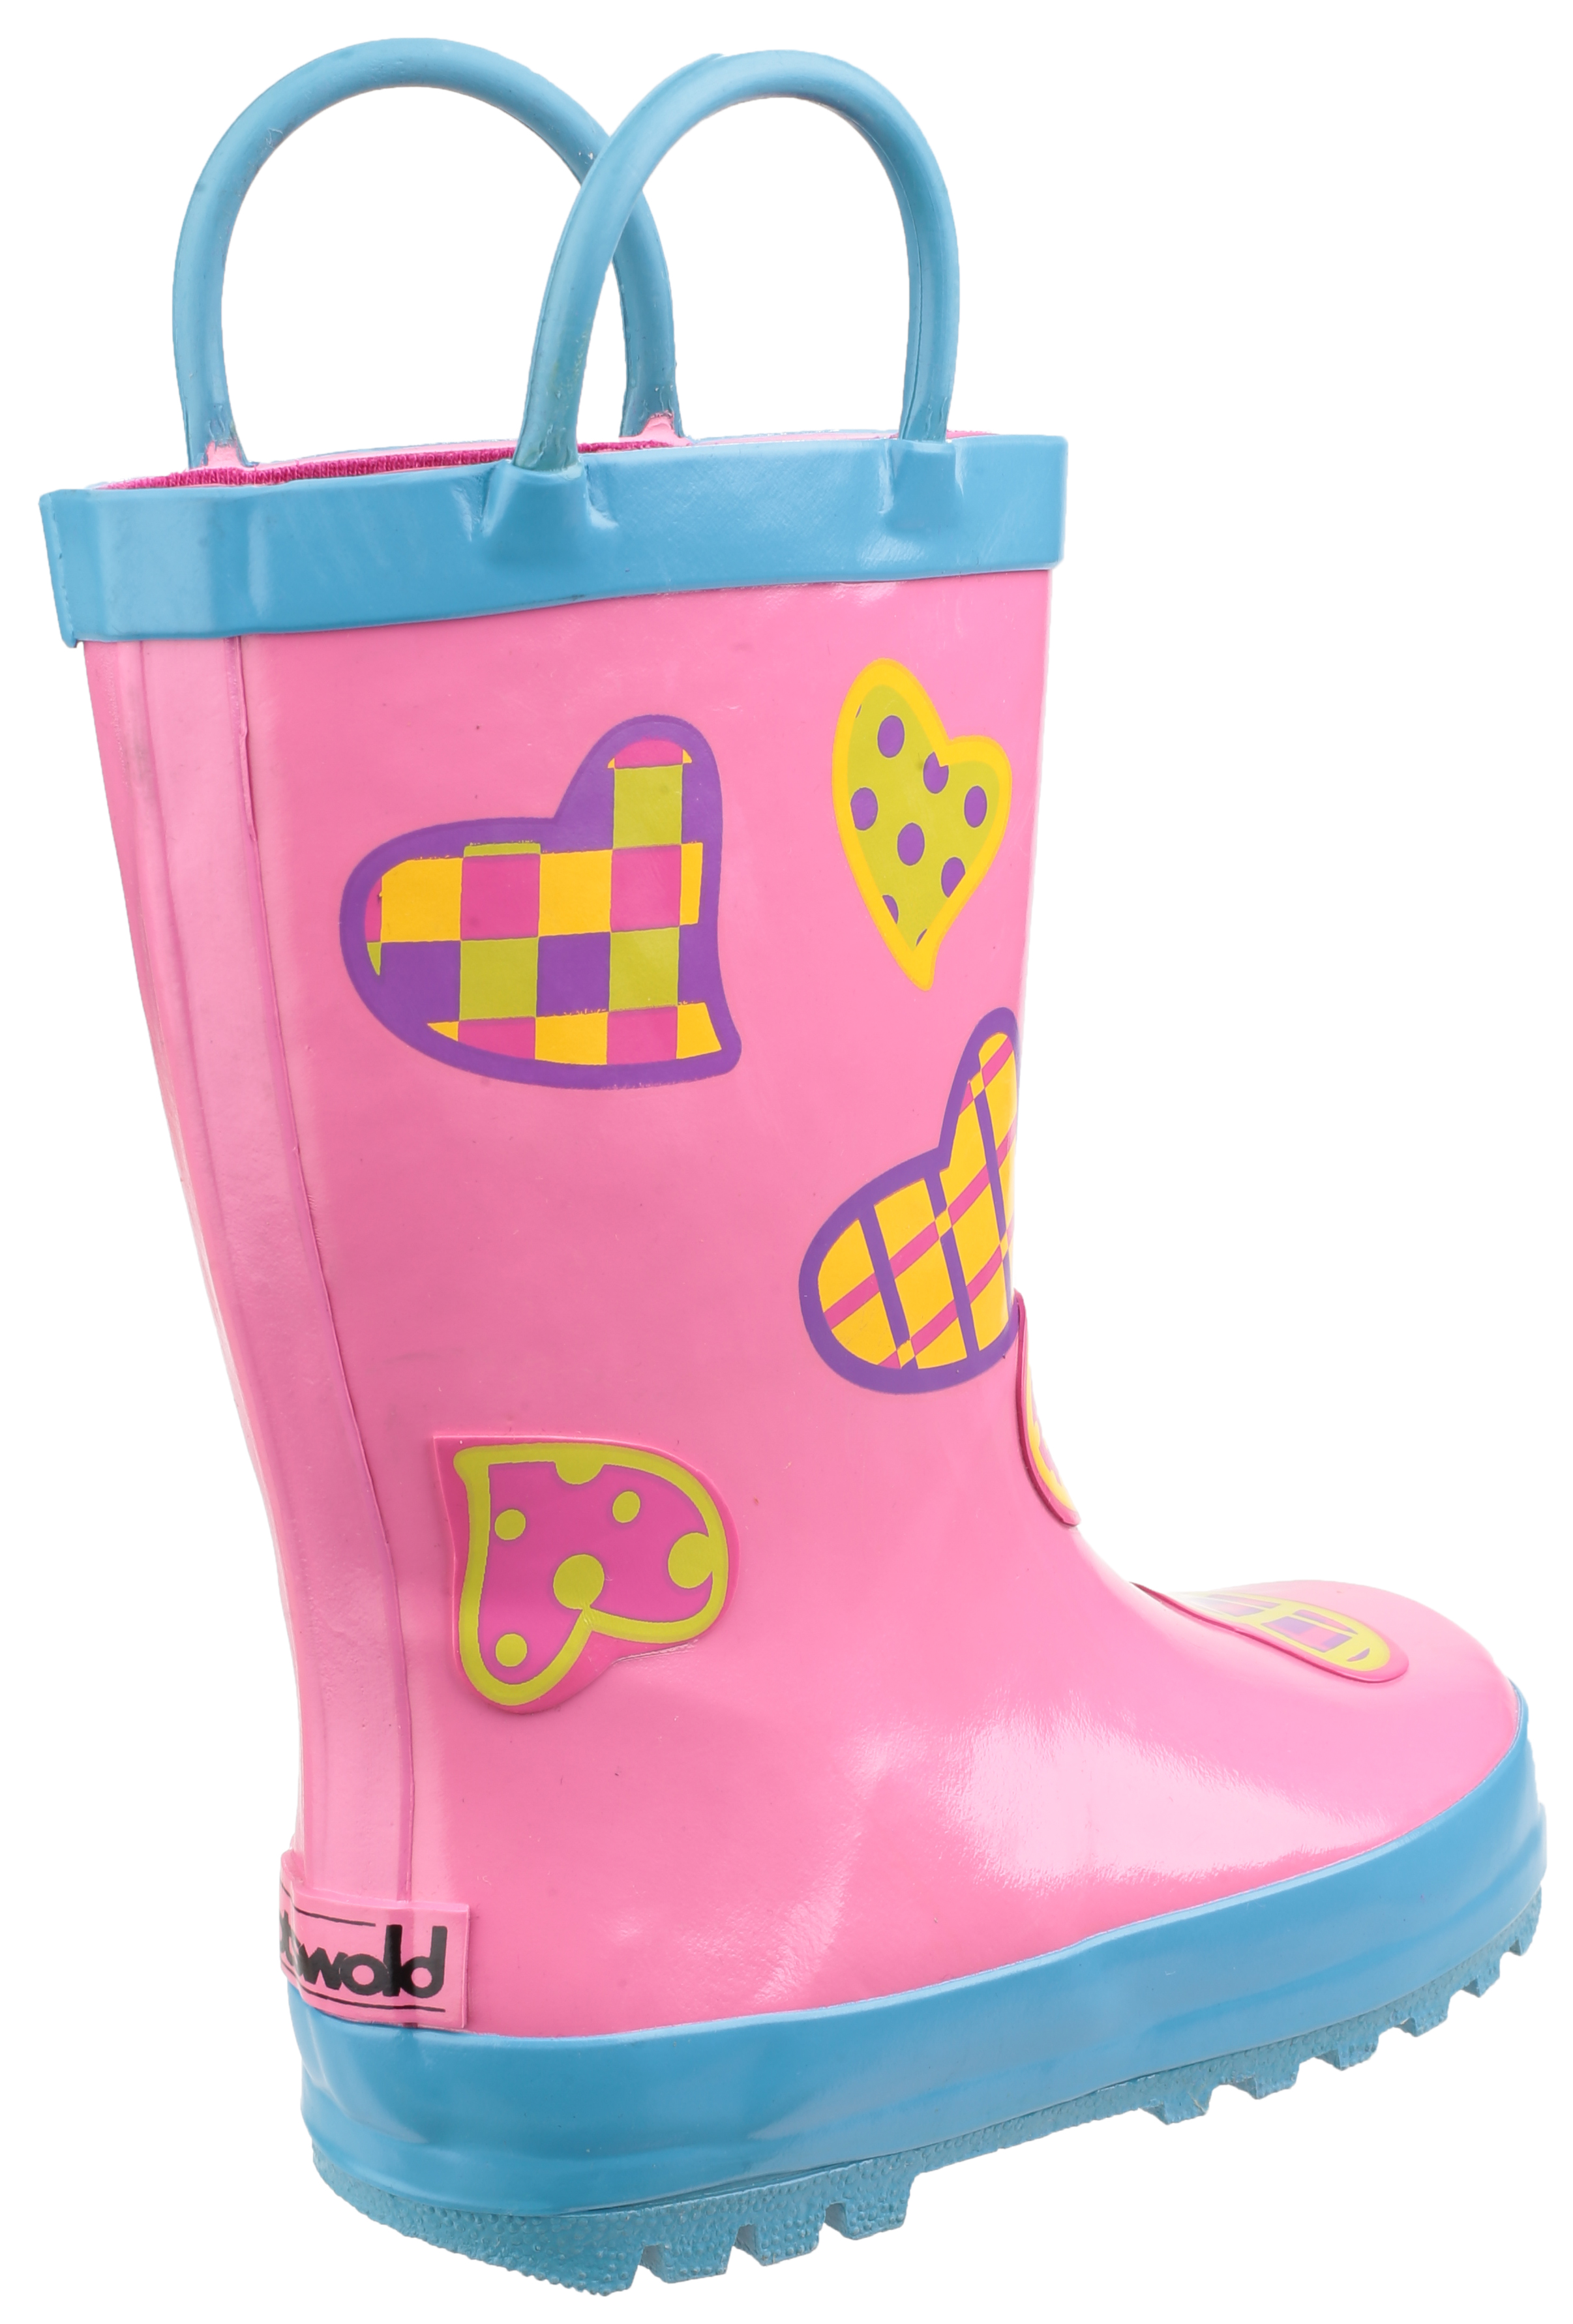 Branded Children Hearts Wellington Boots